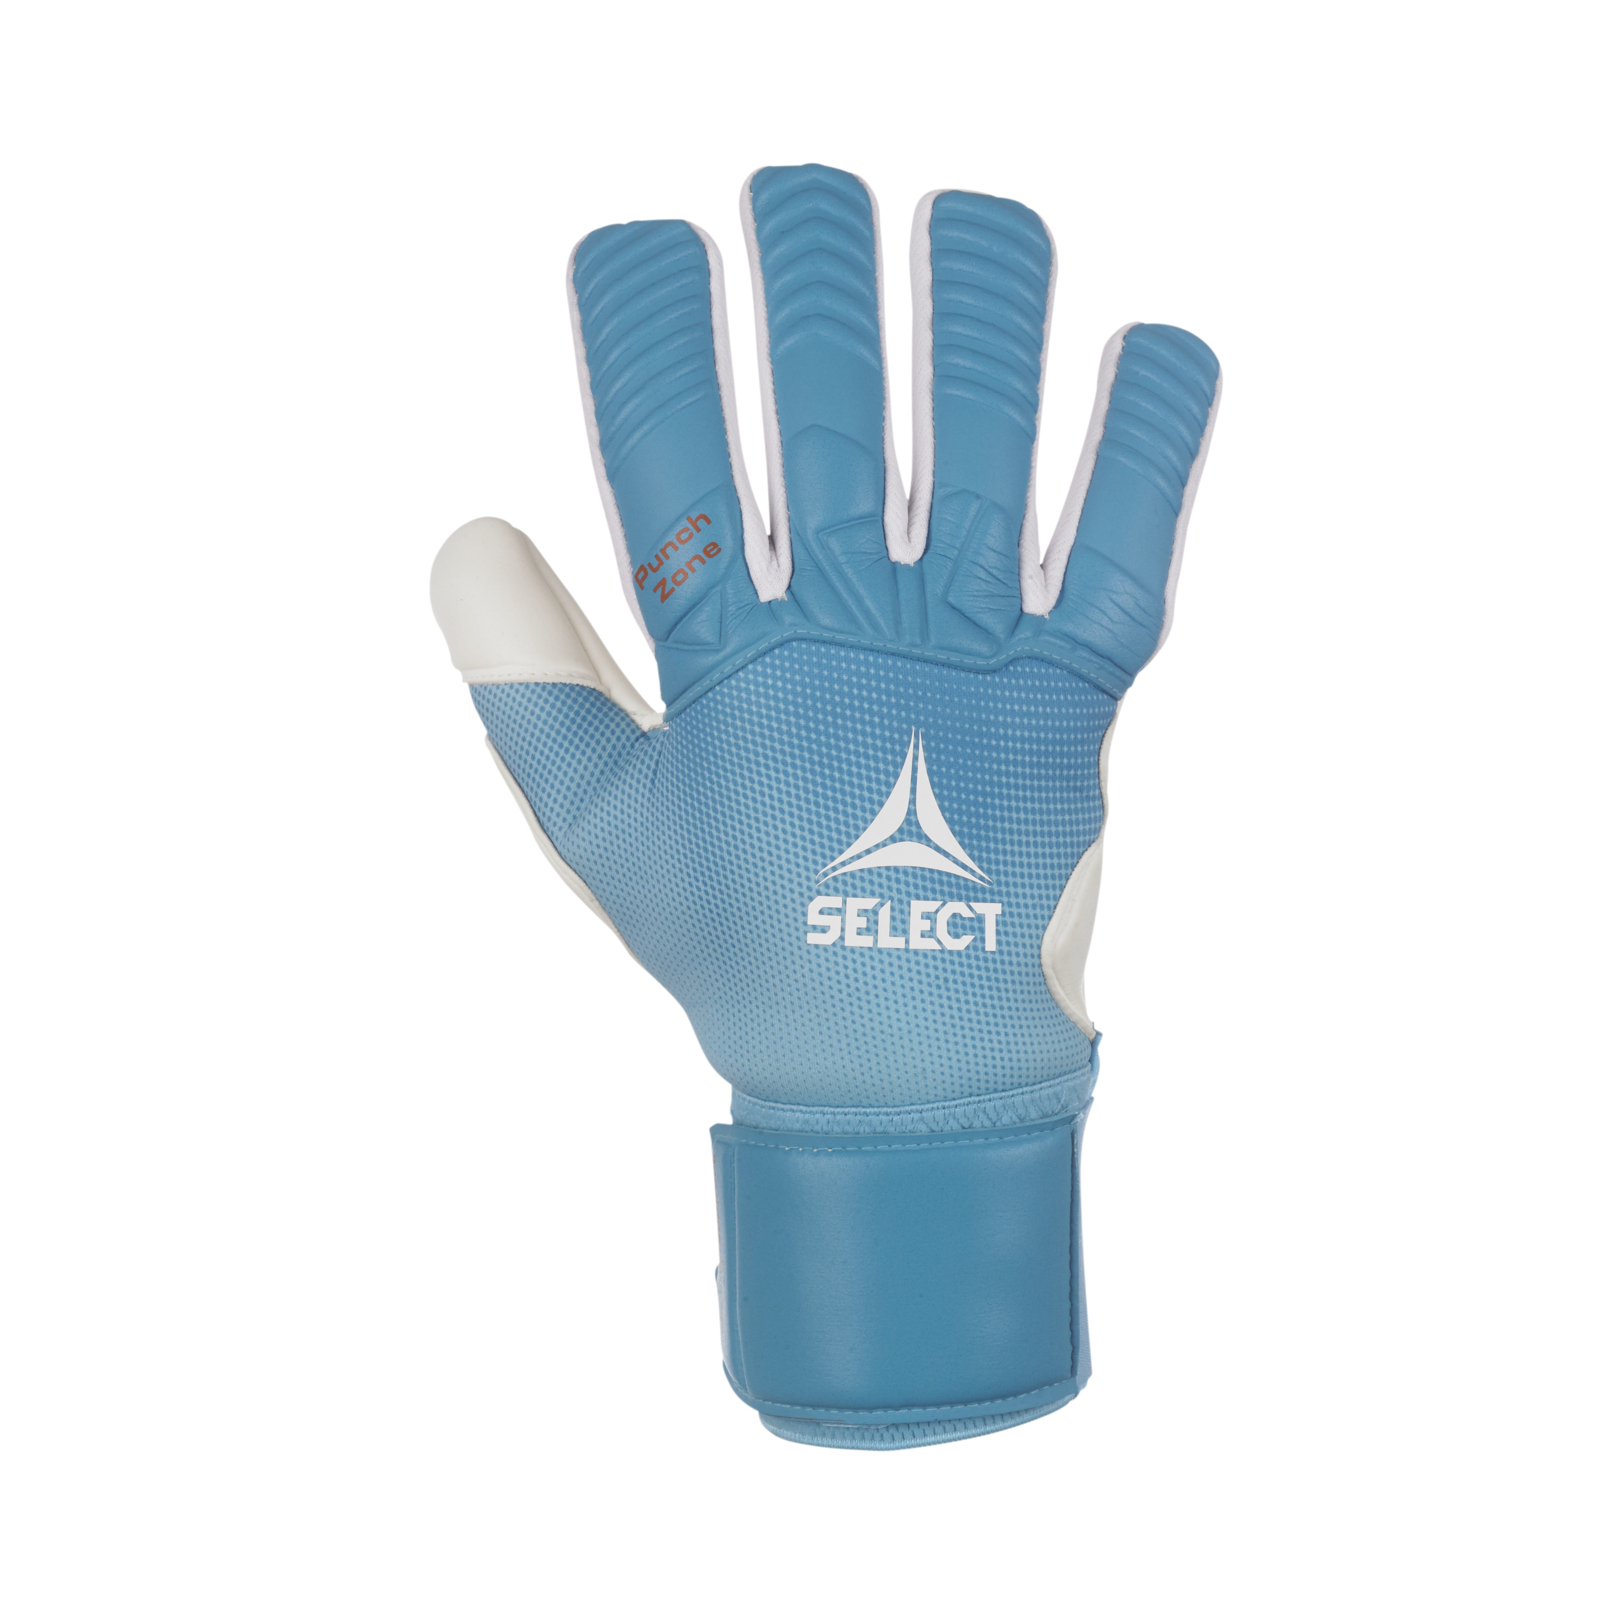 Вратарские перчатки Select Goalkeeper Gloves 33 601331-410 Allround синій, білий Уні 10 (5703543316434) изображение 3